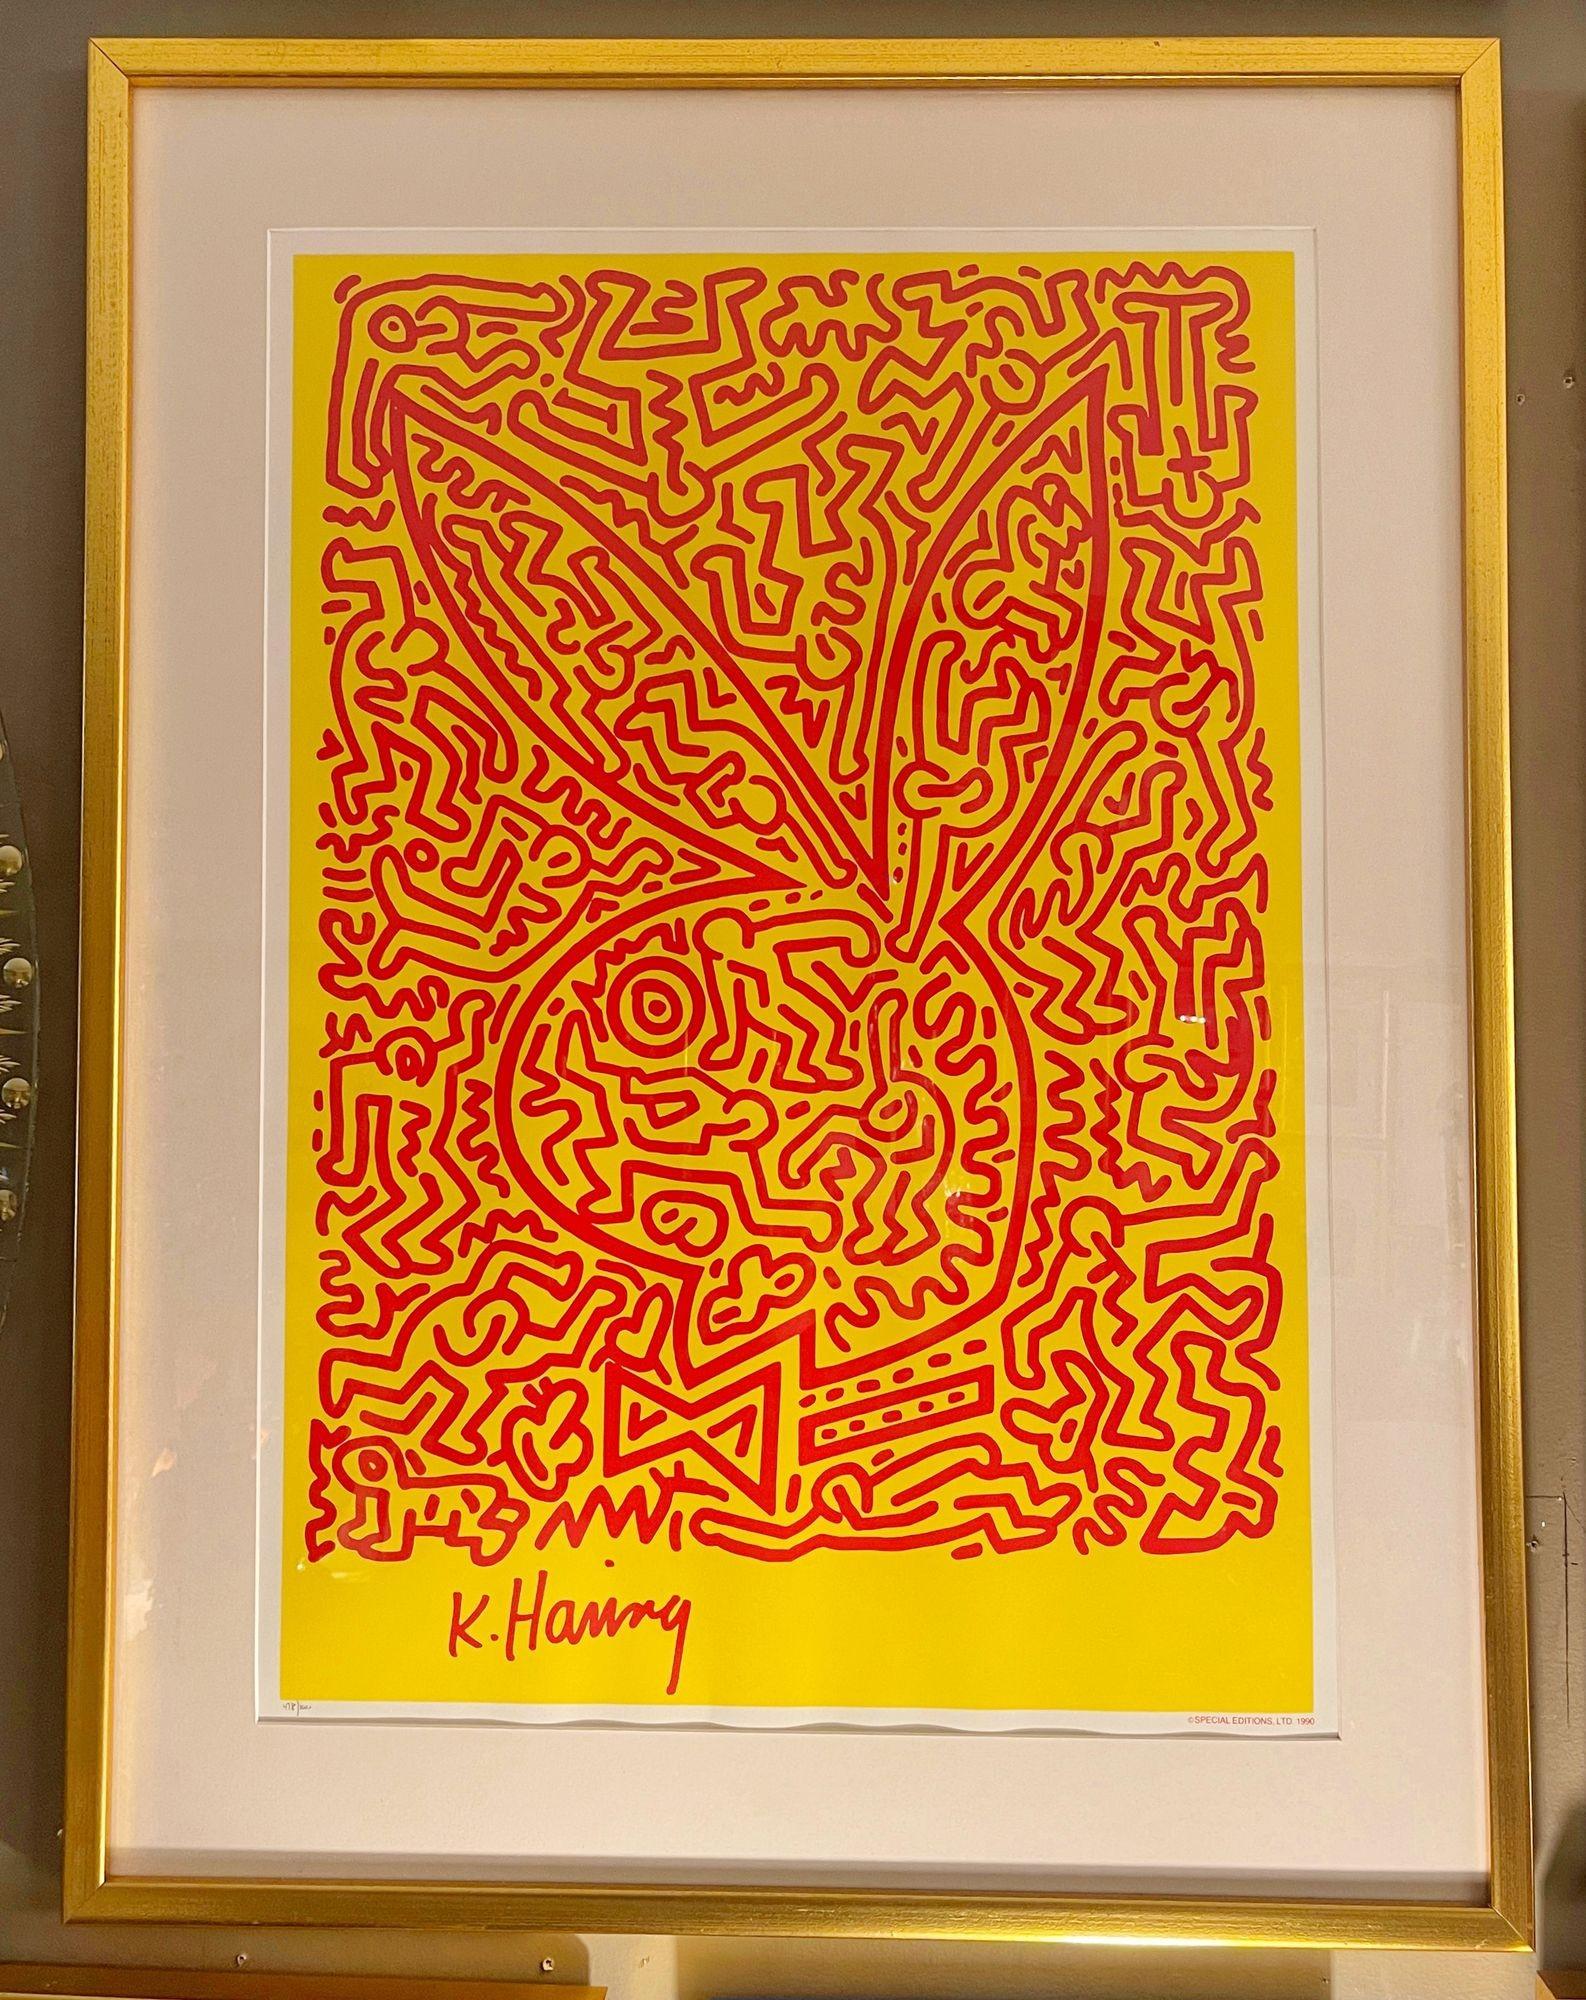 Keith Haring (Amerikaner, 1958-1990) 'Playboy Bunny No. 2' Serigraphie.
Sonderauflagen, LTD. 1990 - 478/1000